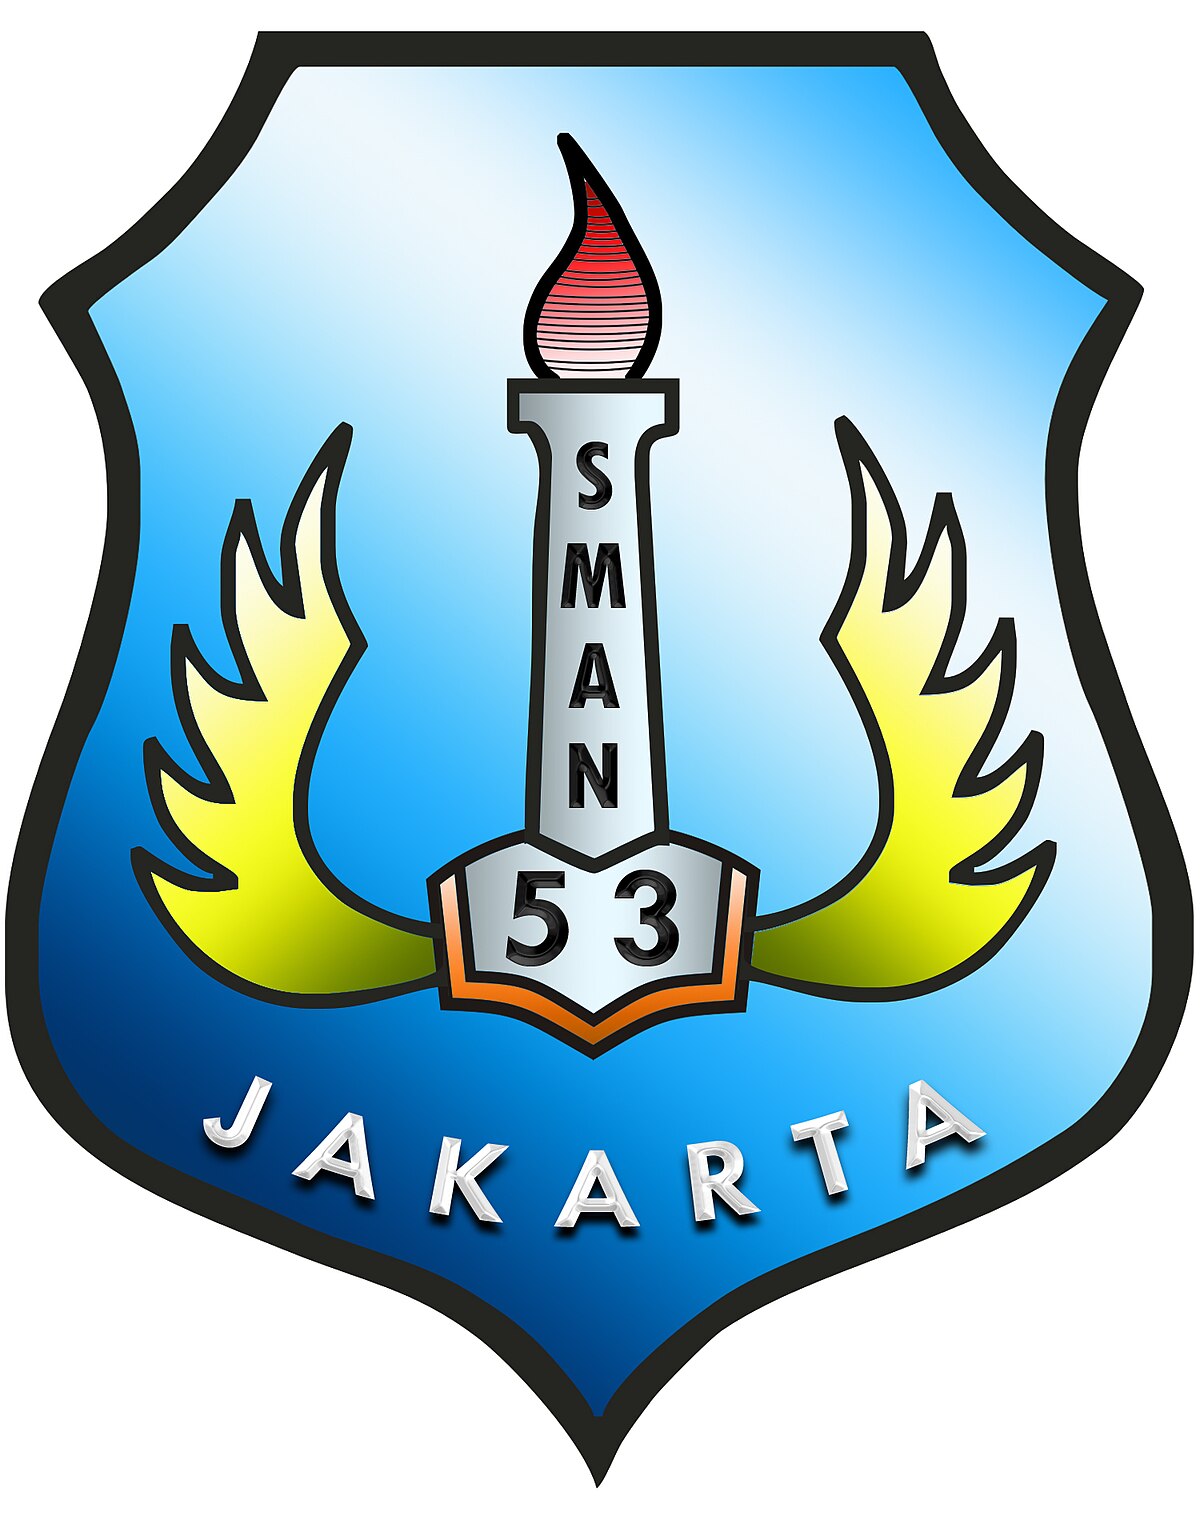 SMA Negeri 53 Jakarta Wikipedia bahasa Indonesia 